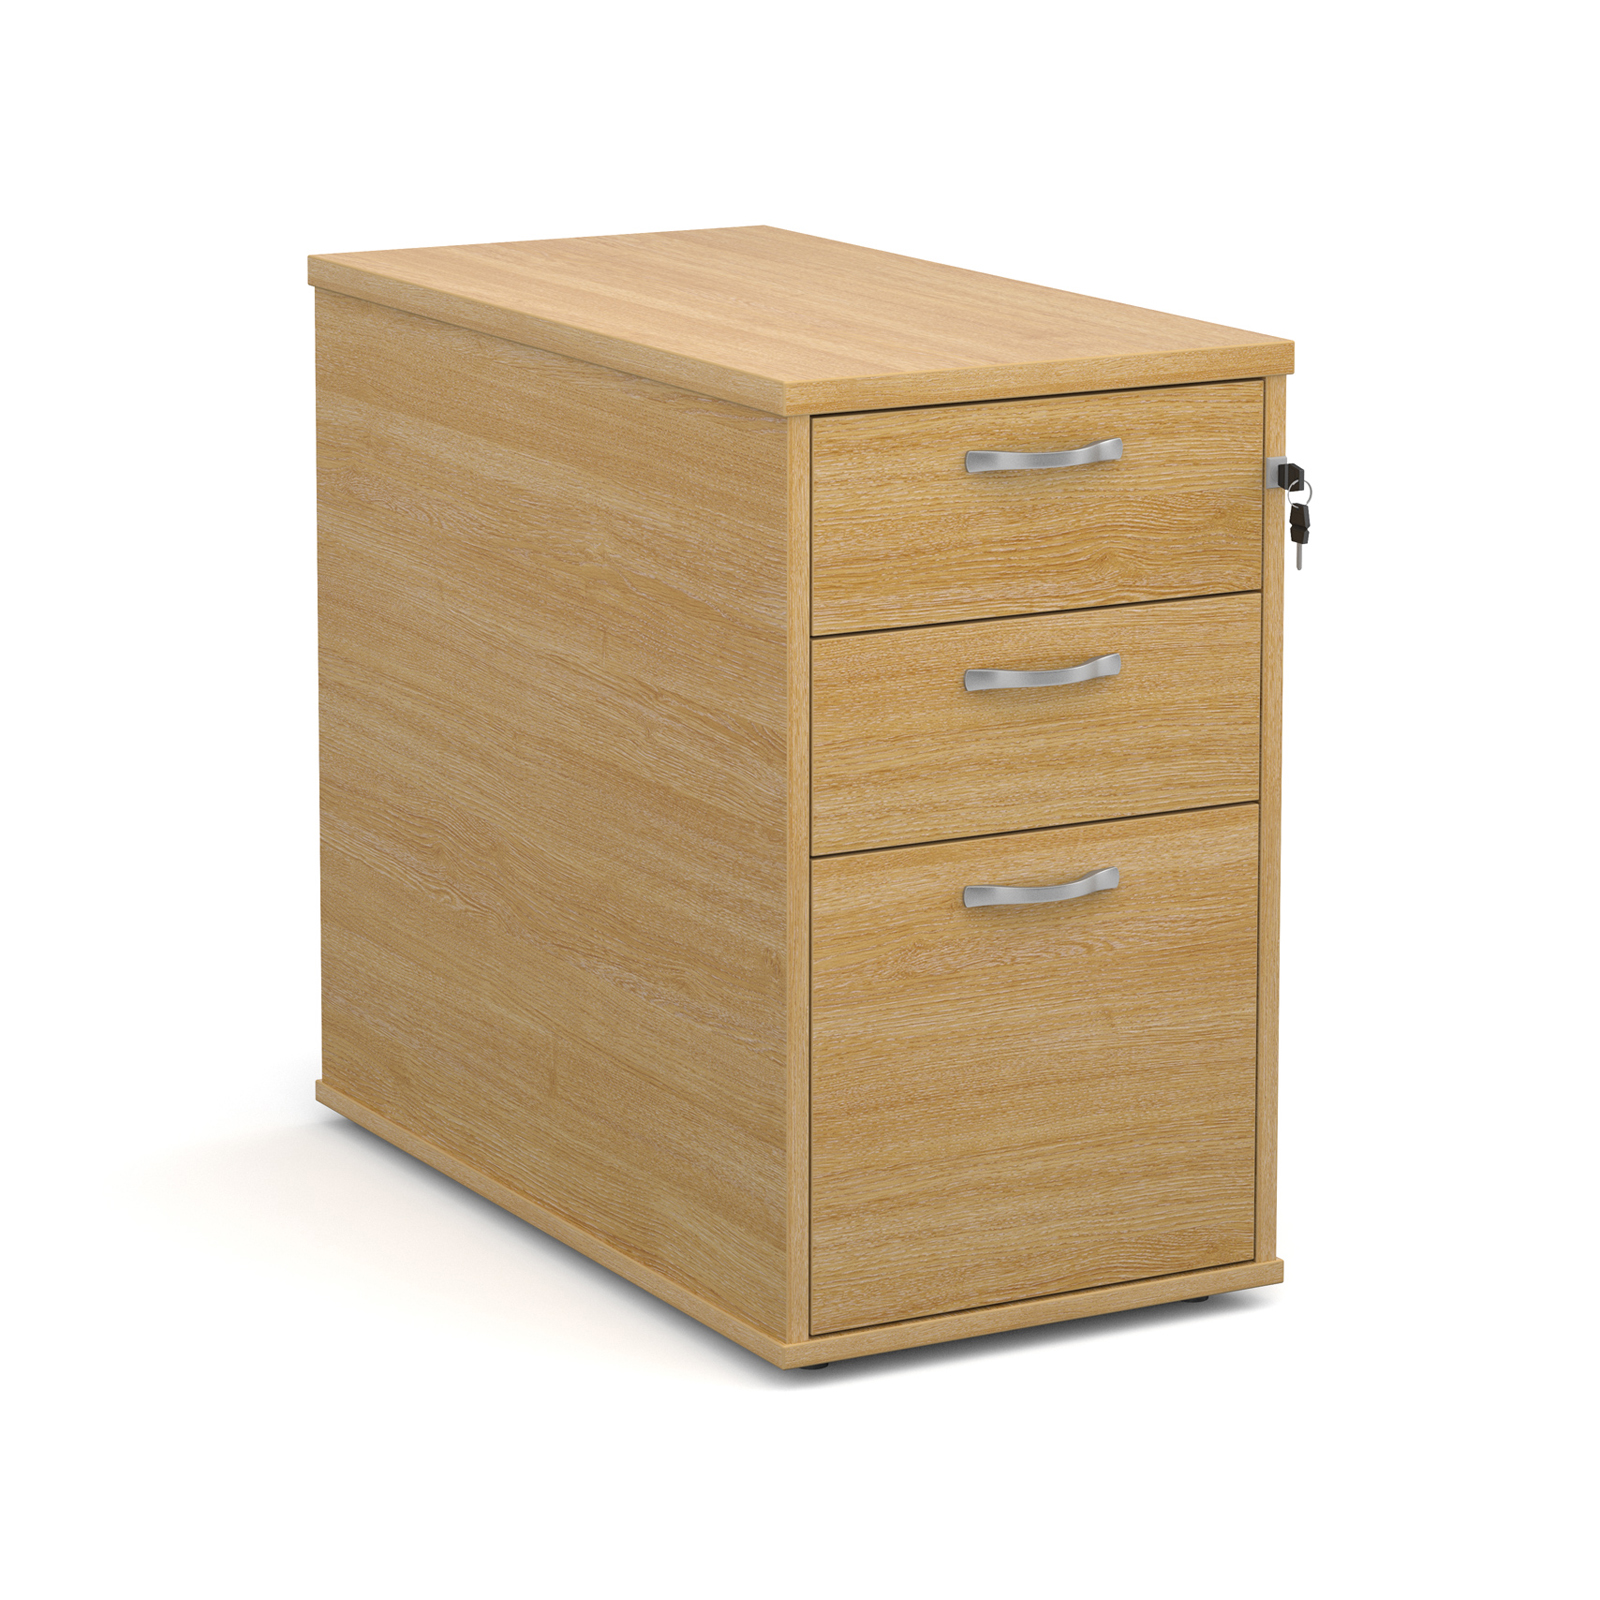 3 Drawer Desk high 3 drawer pedestal with silver handles 800mm deep - oak